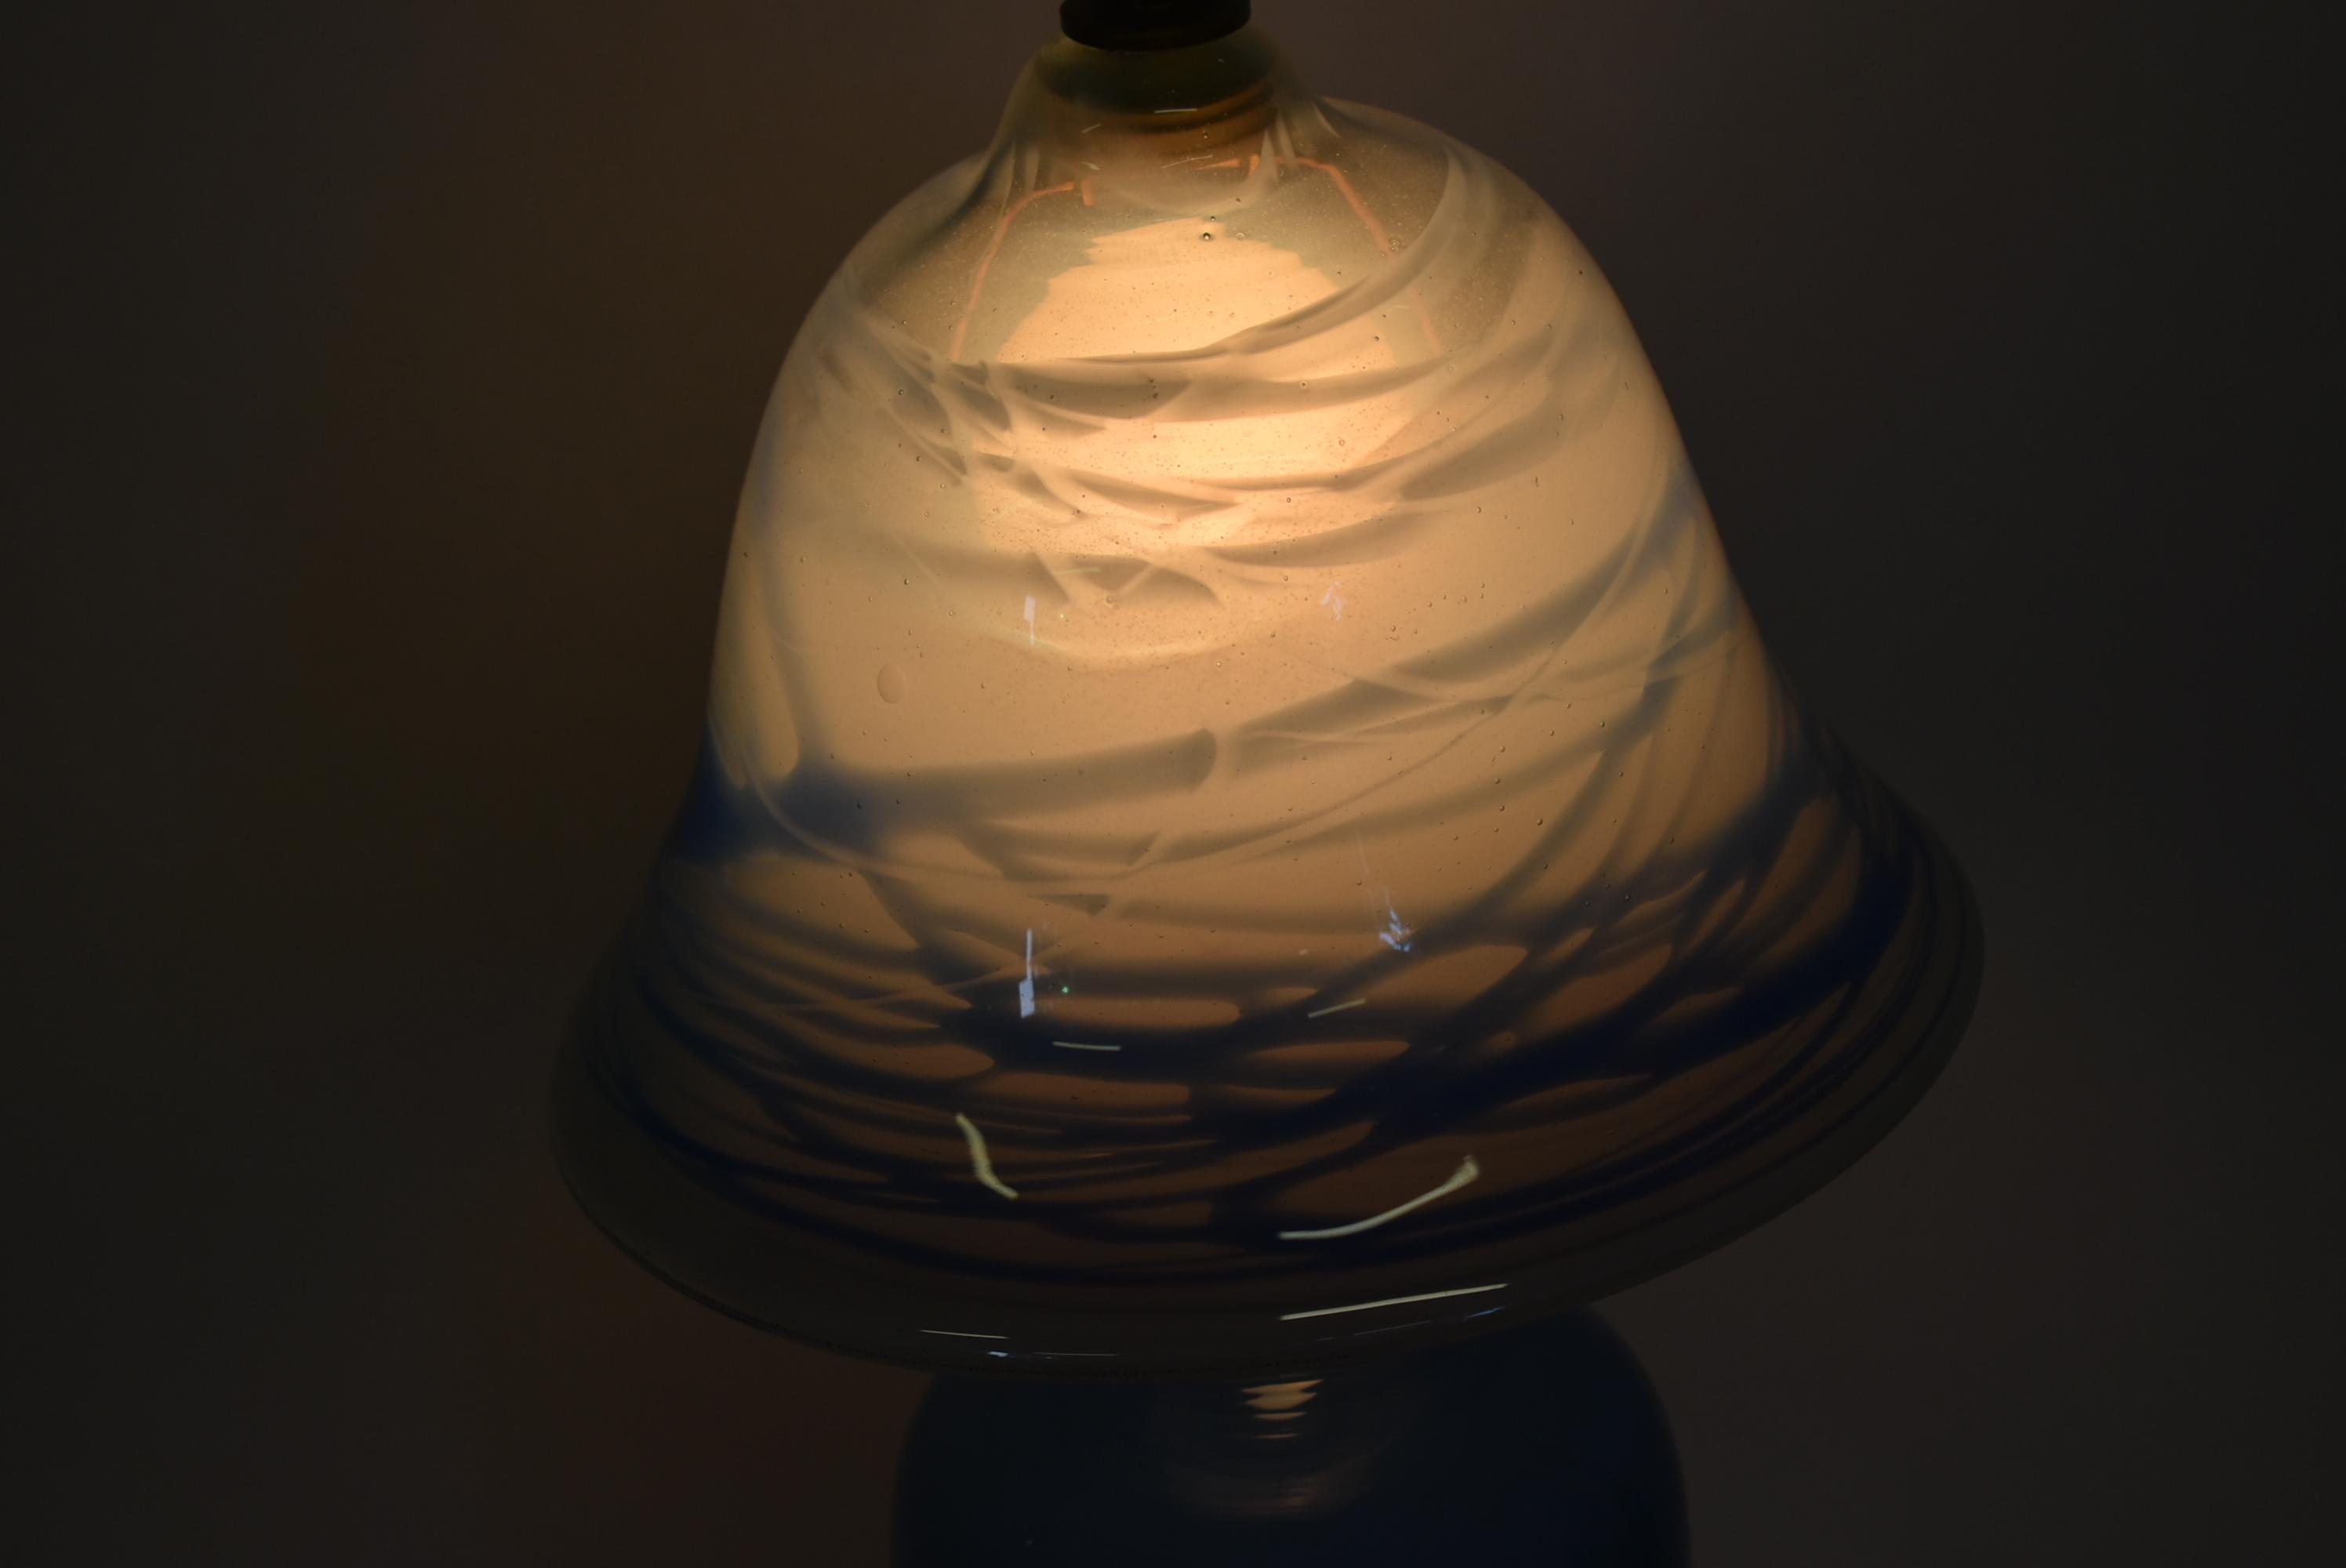 1930'S-1940'S LEVITON TABLE LAMP!